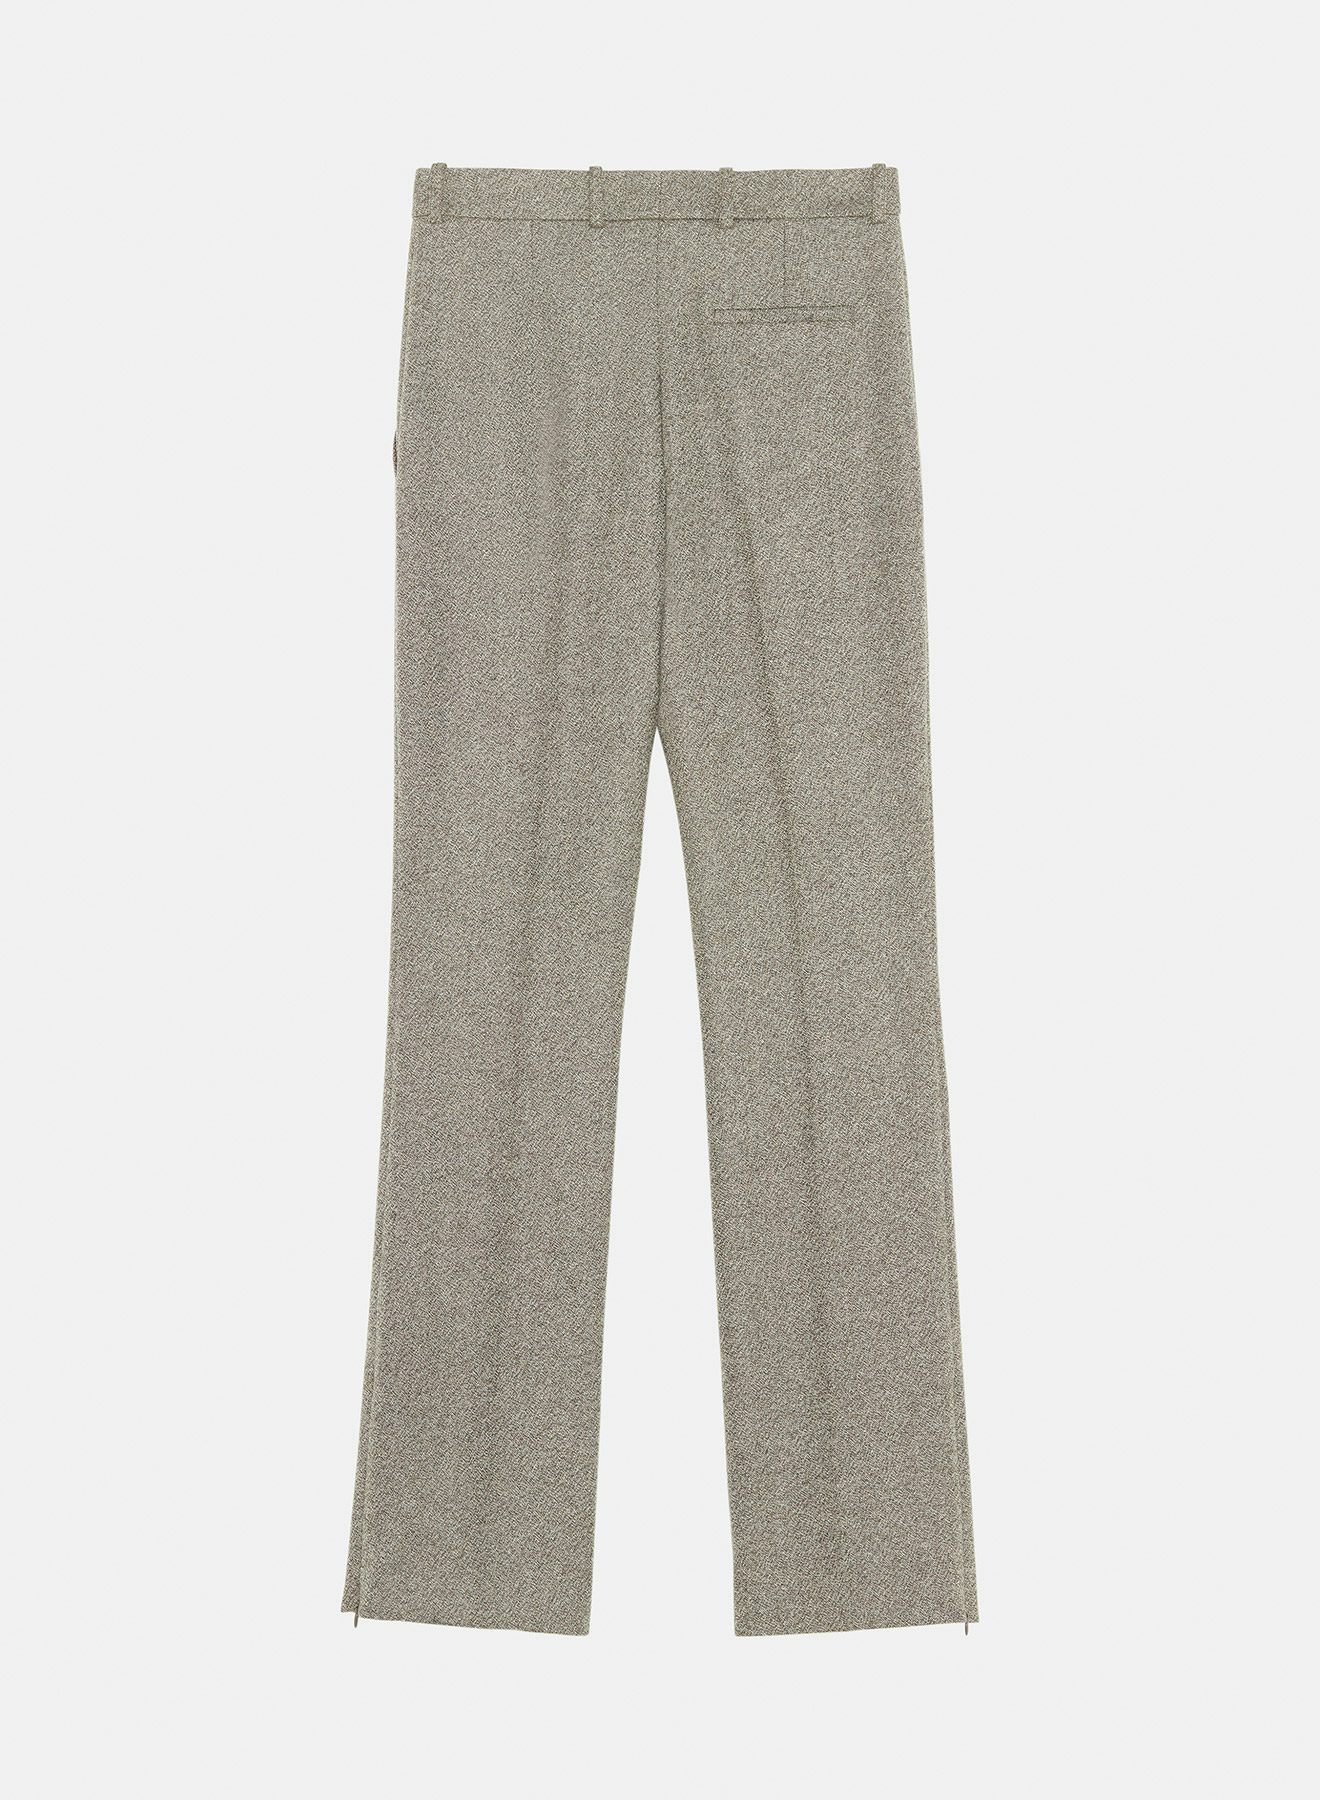 Pantalon droit en laine mouchetée marron et blanc - Nina Ricci